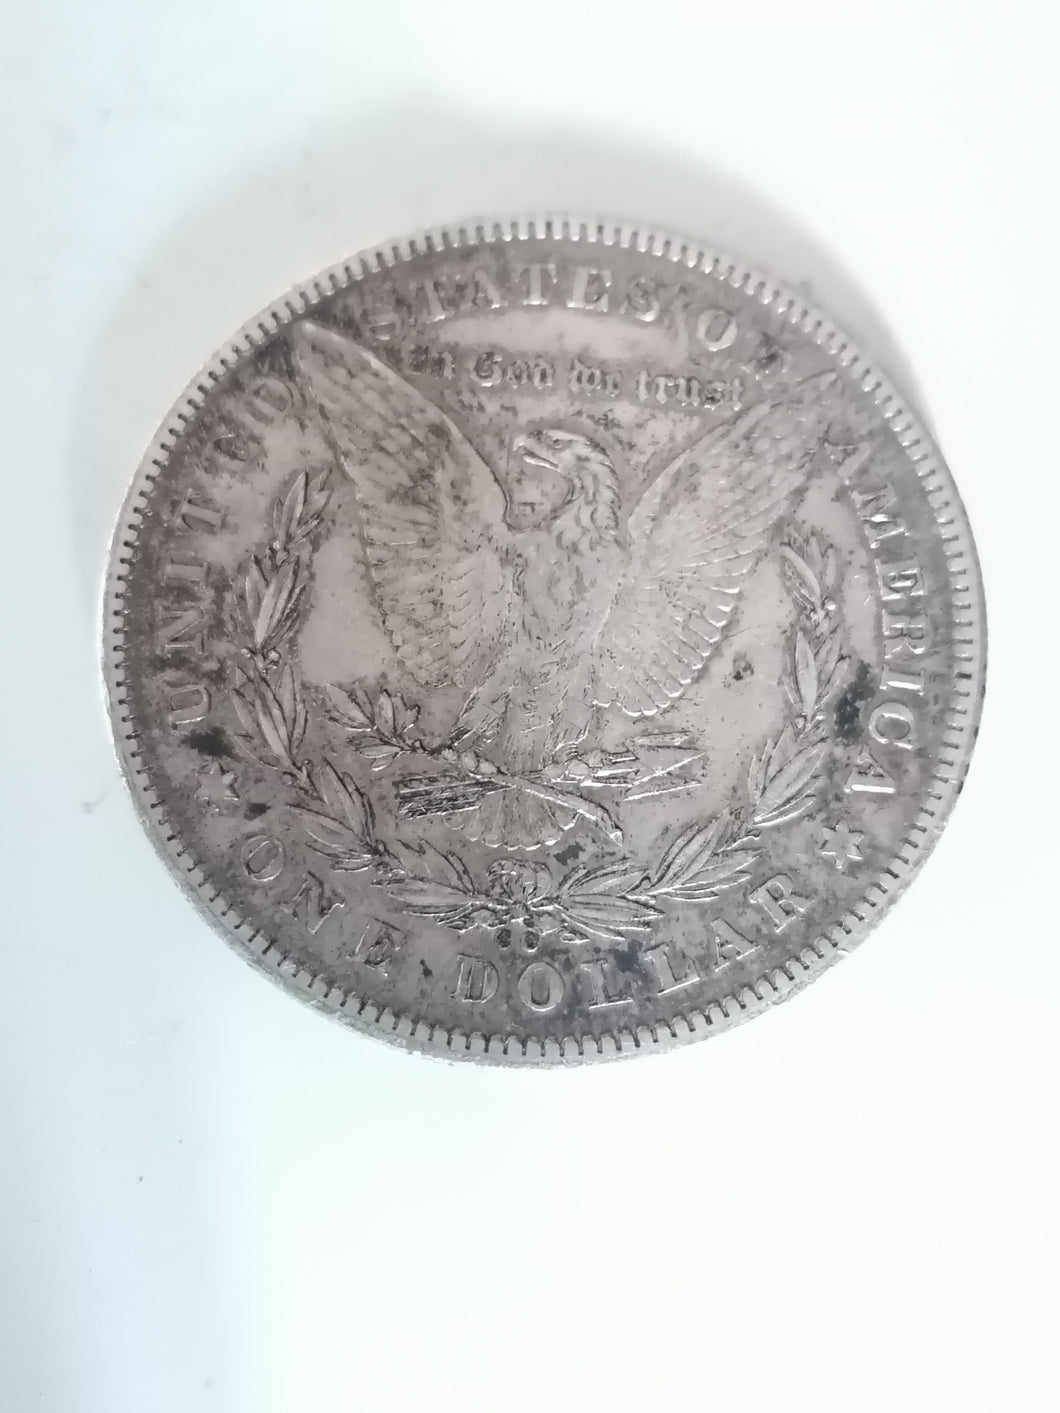 One Dollar Morgan 1878 CC, état superbe.